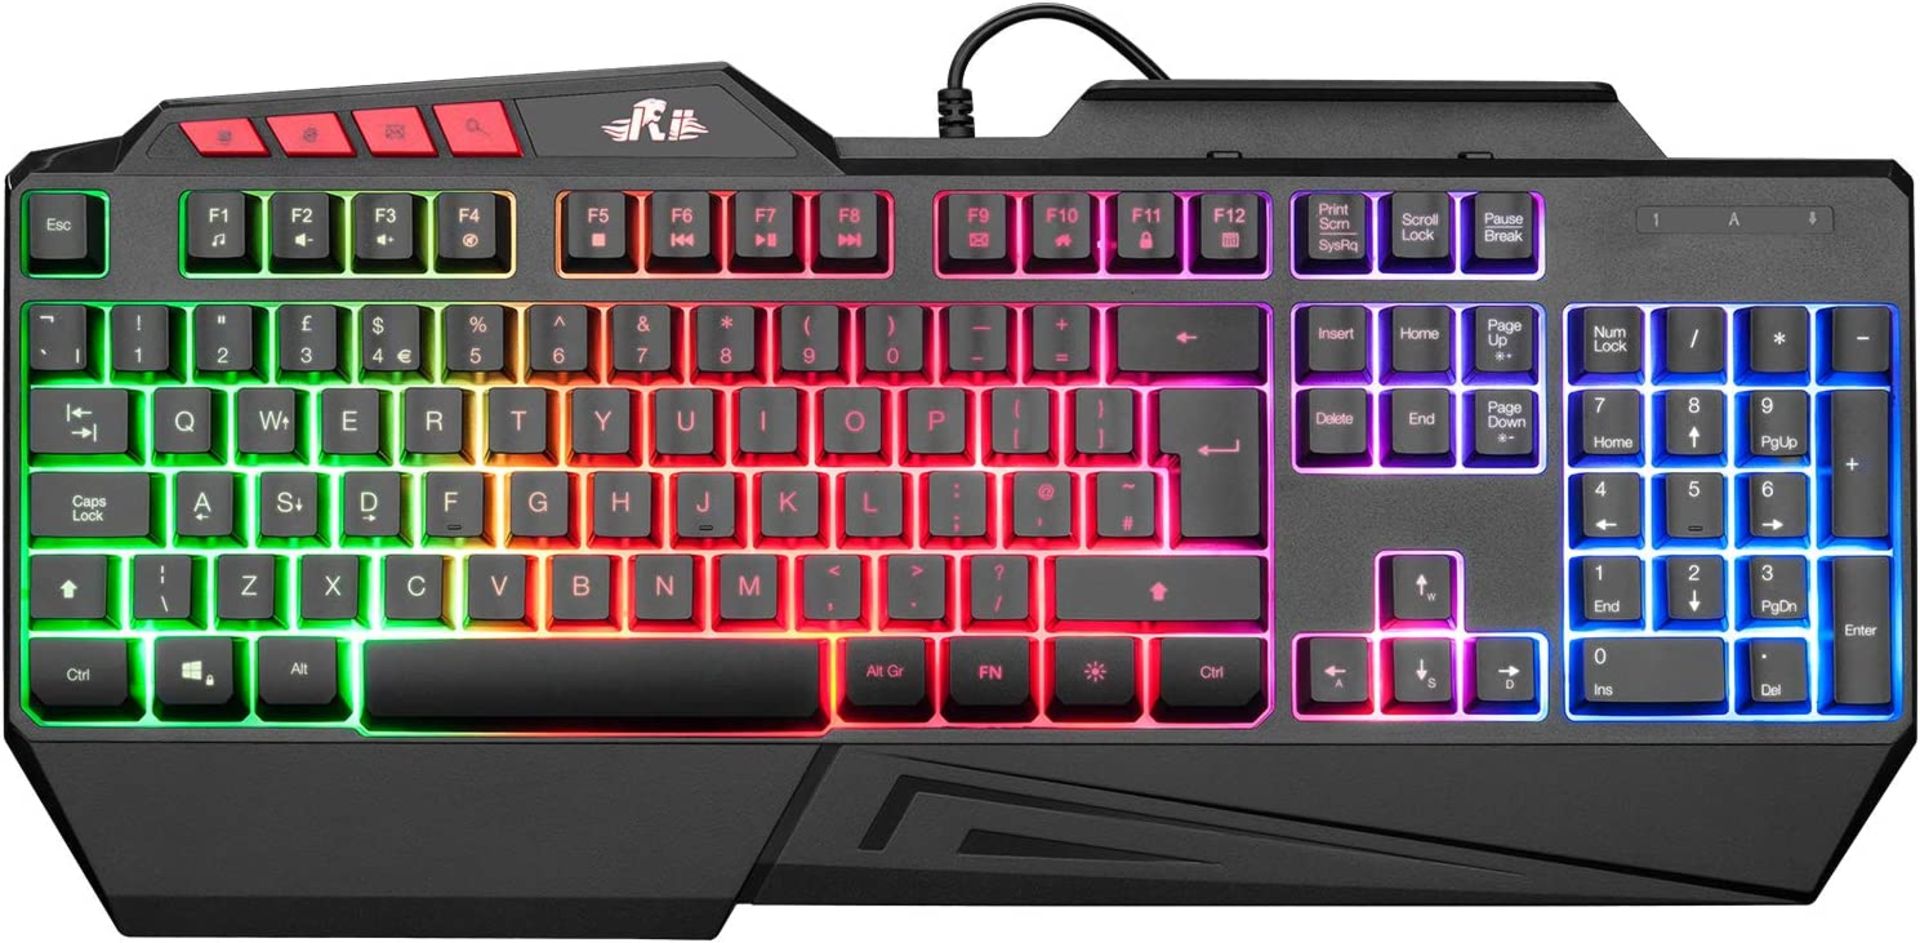 Rii RK202 Gaming Keyboard, LED Rainbow Backlit Light up Keyboard With Membrane Keys, Spill-